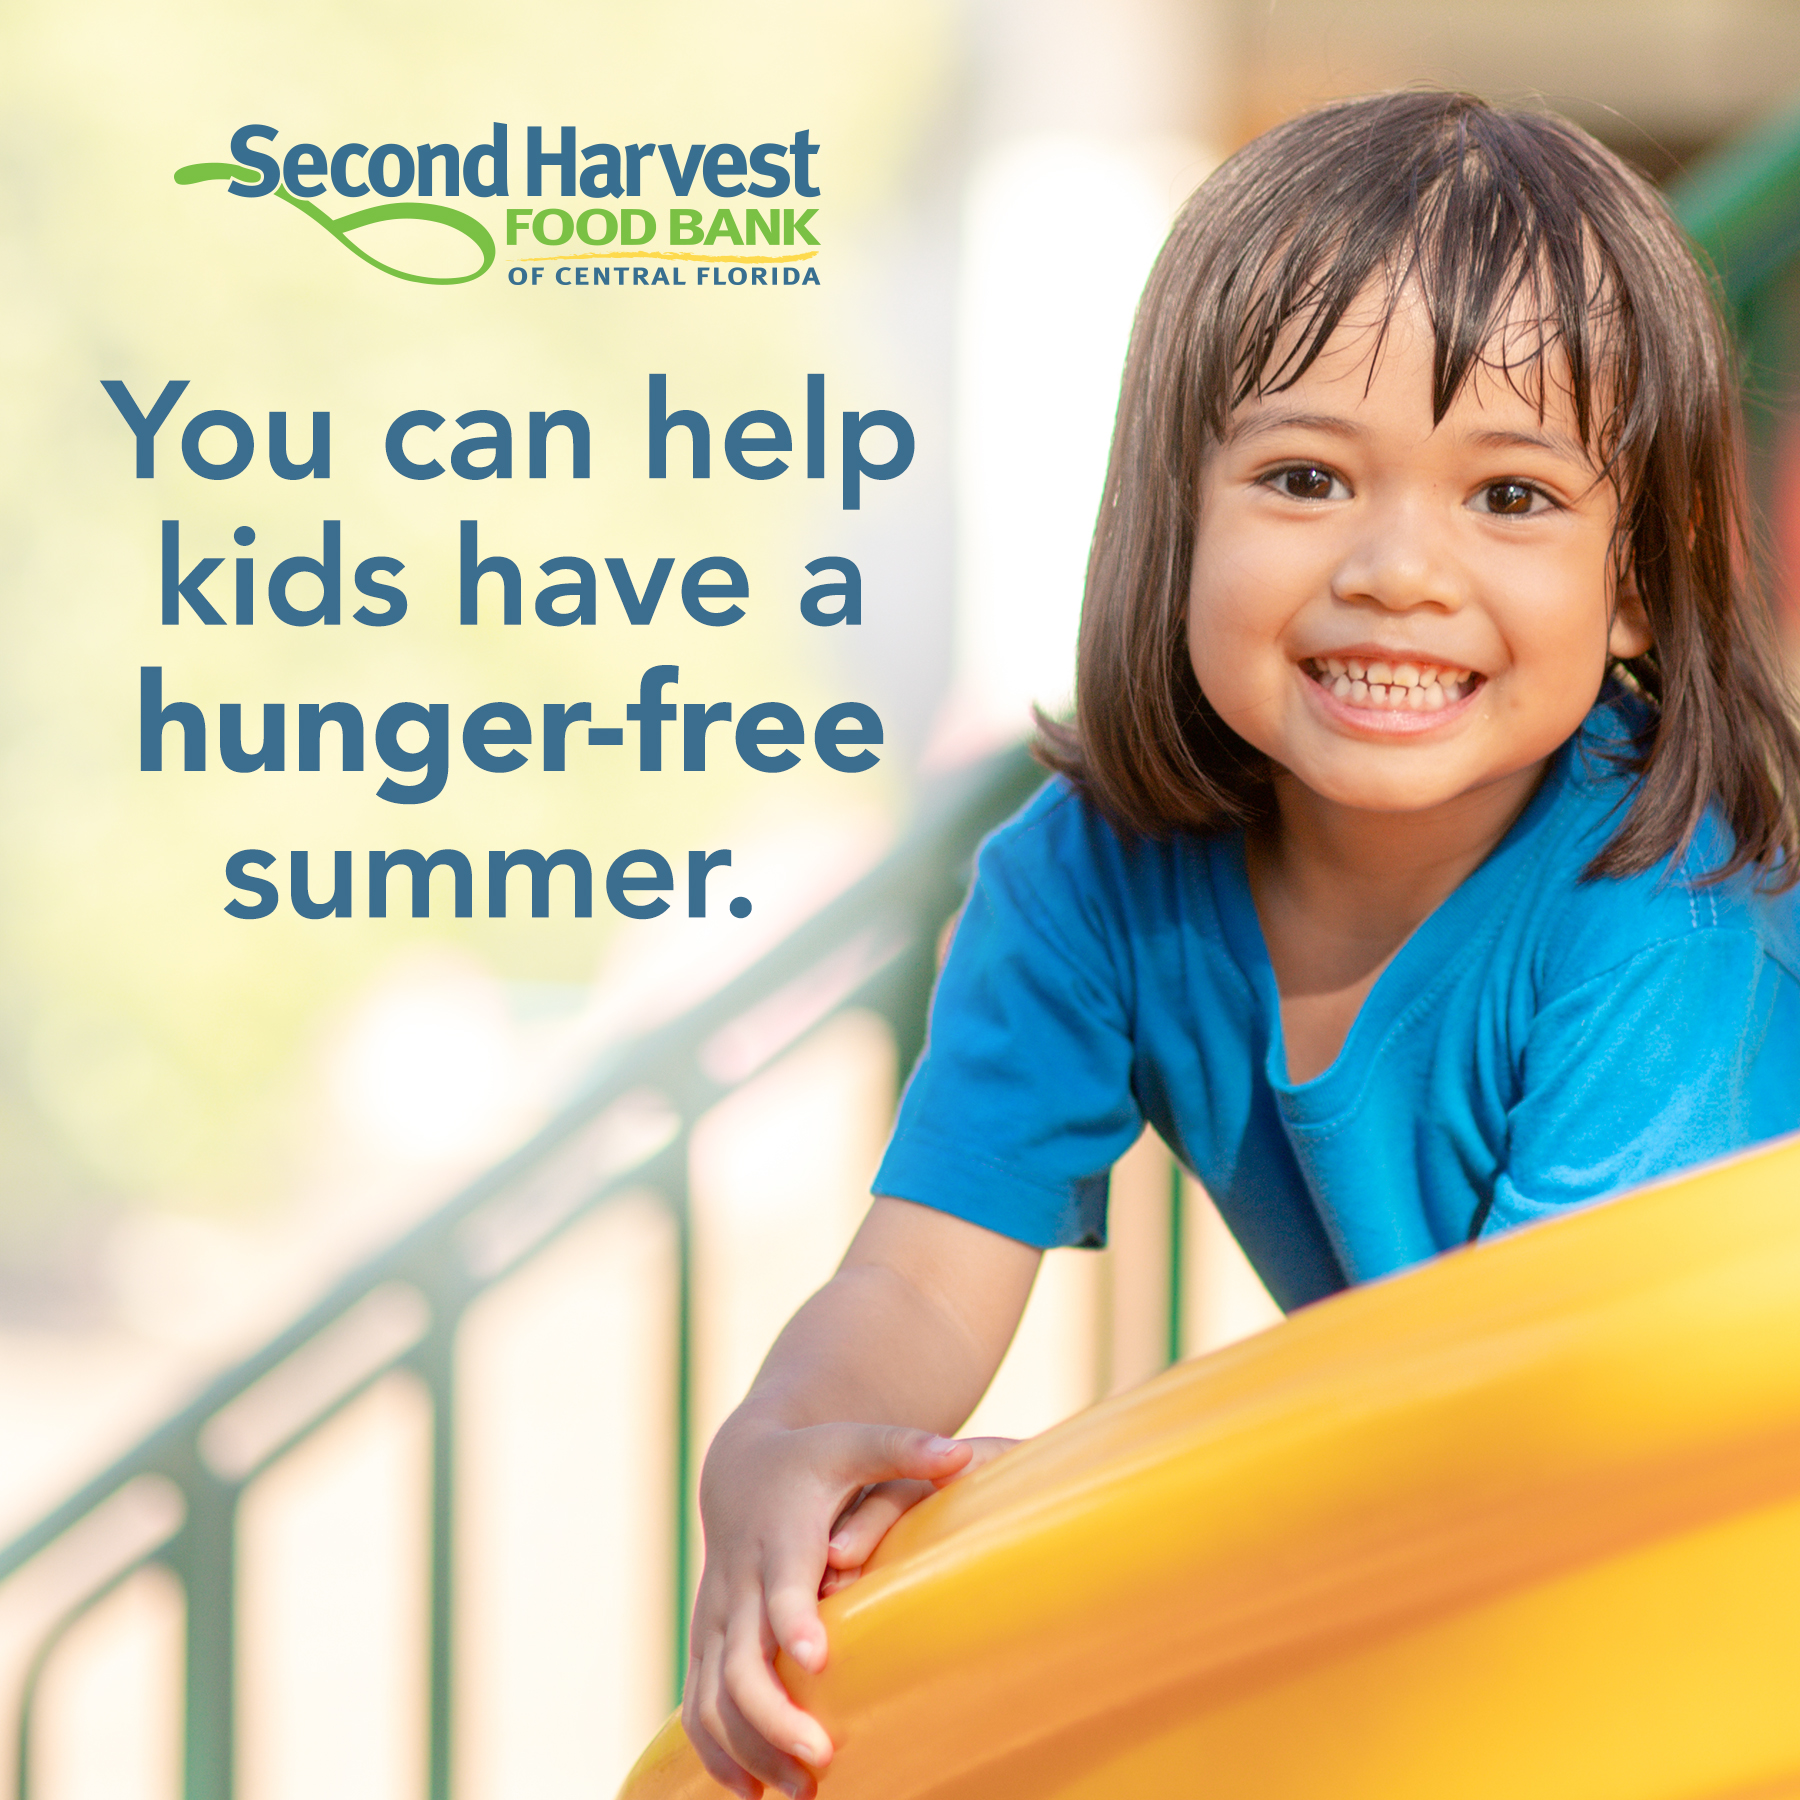 Give children a hunger-free summer